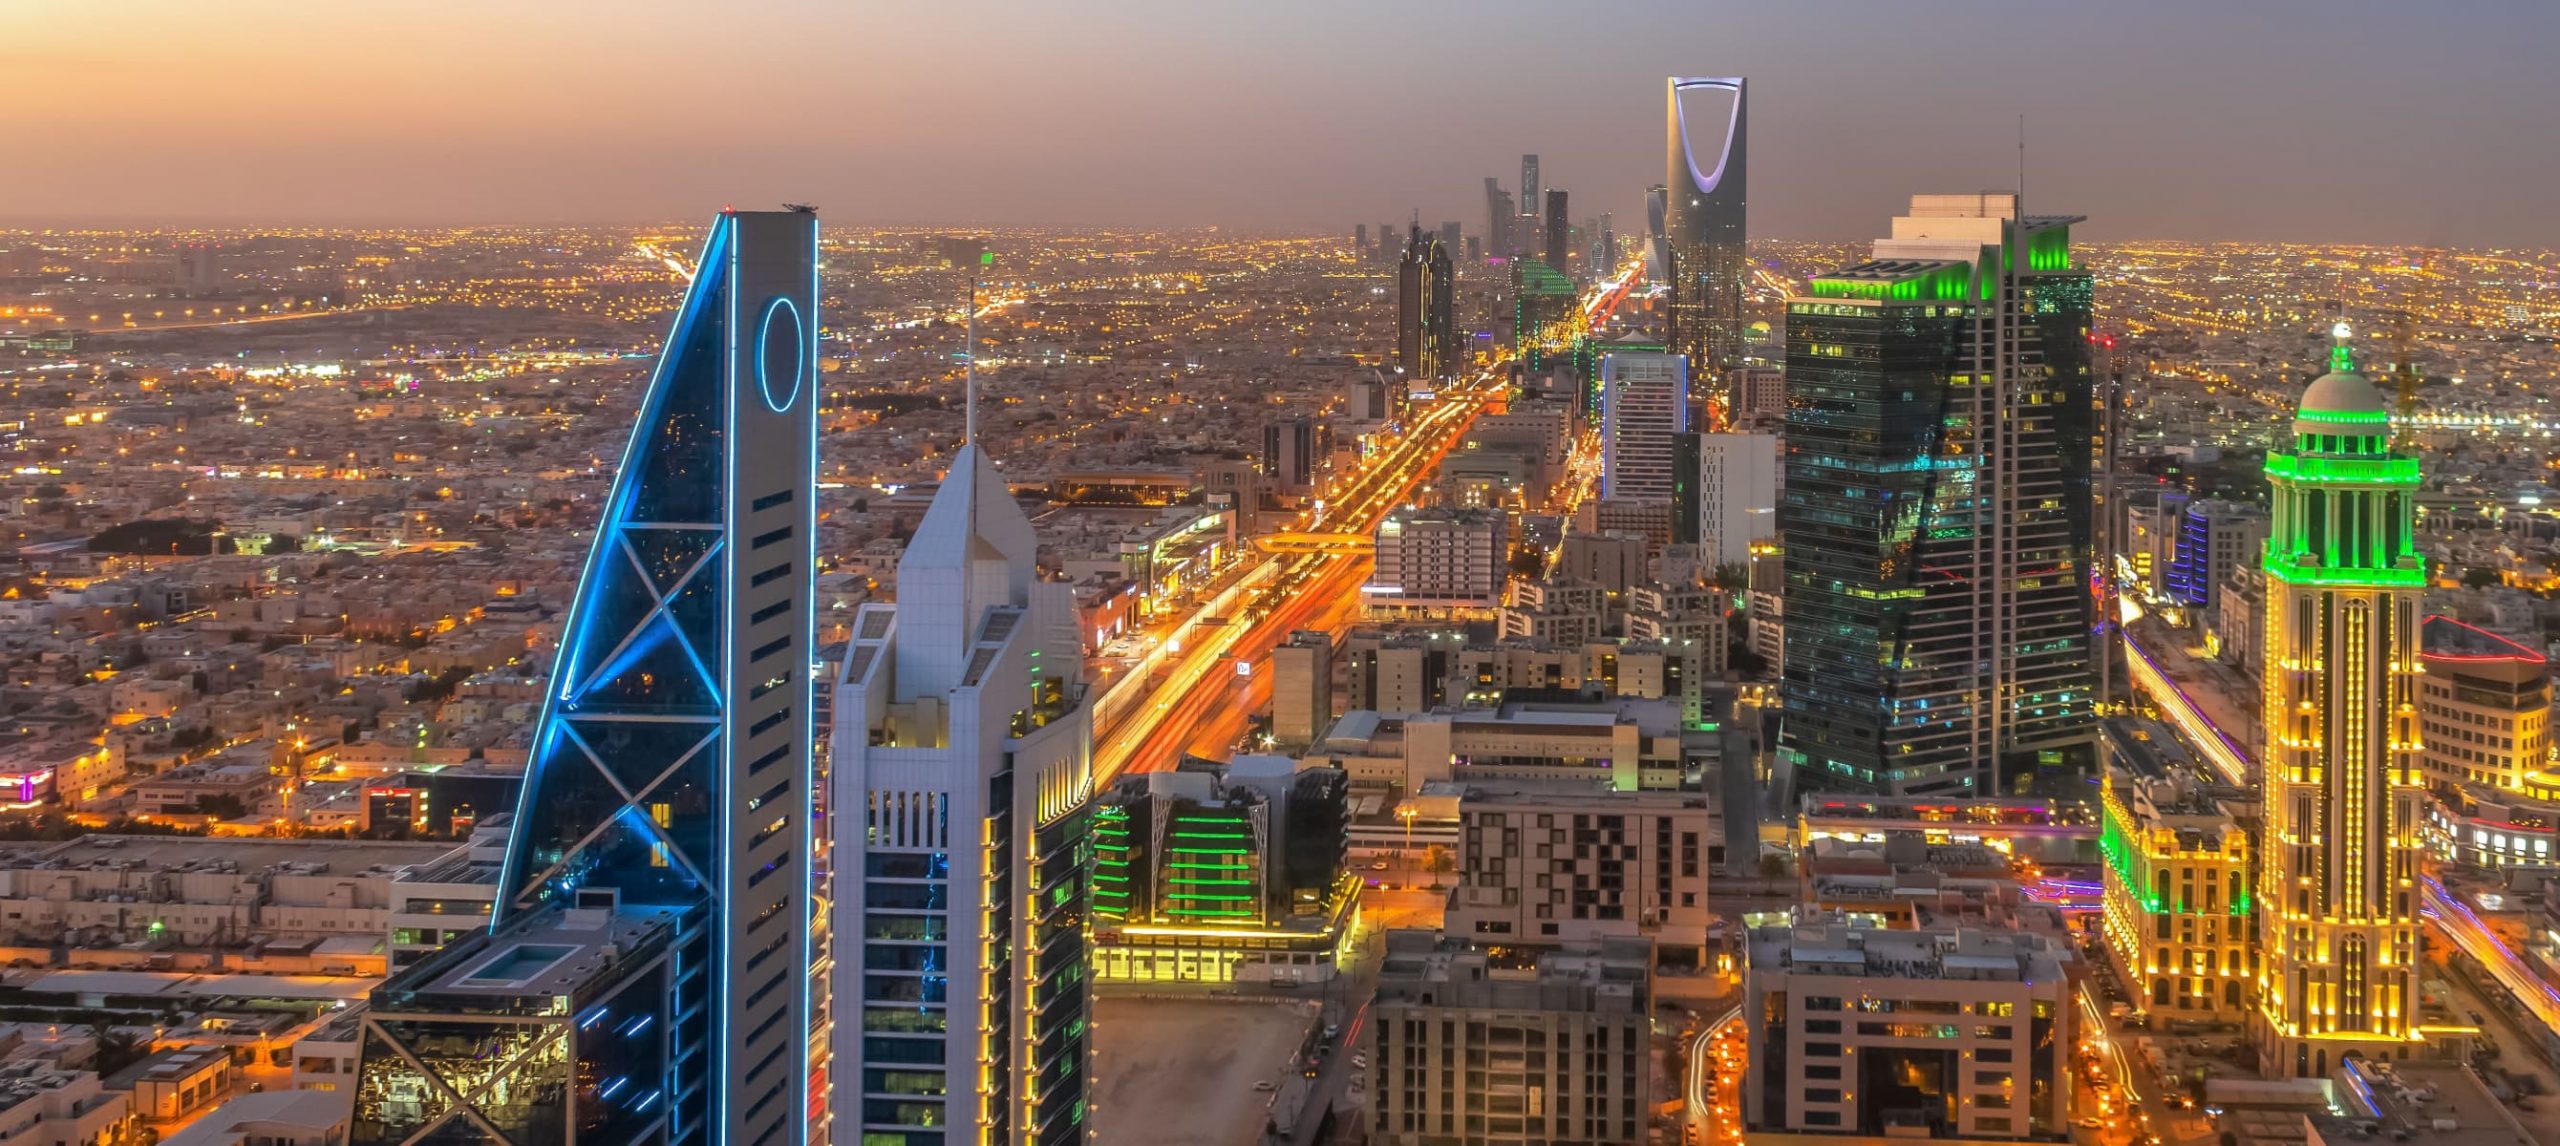 The Best Riyadh Places to Visit in Saudi Arabia